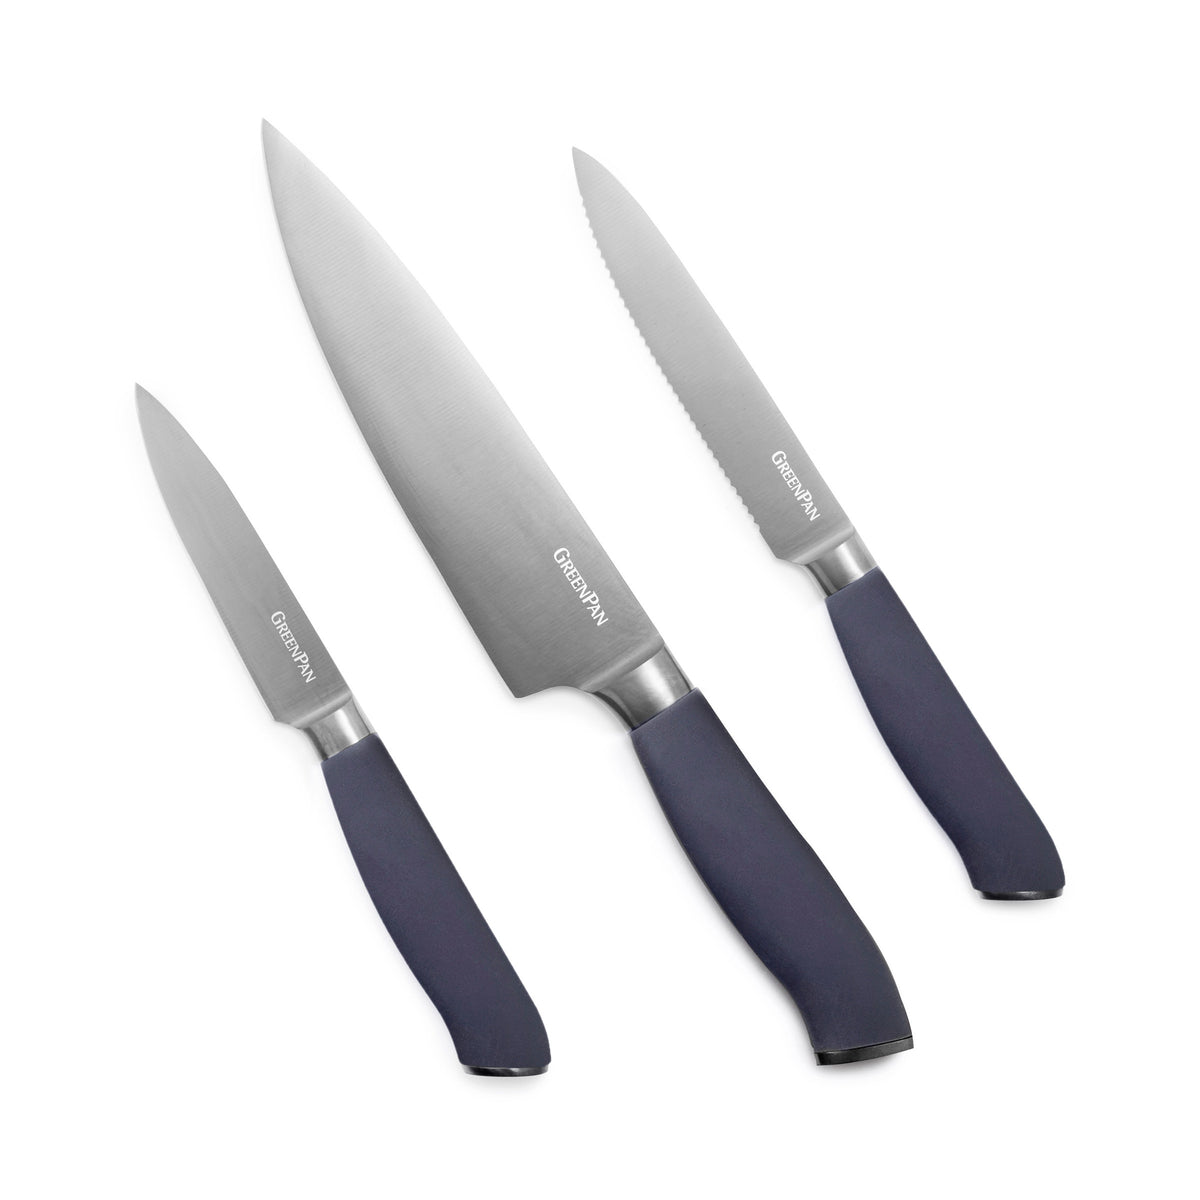 Knife Set with Slim Block Stainless Steel 13-Piece Kitchen